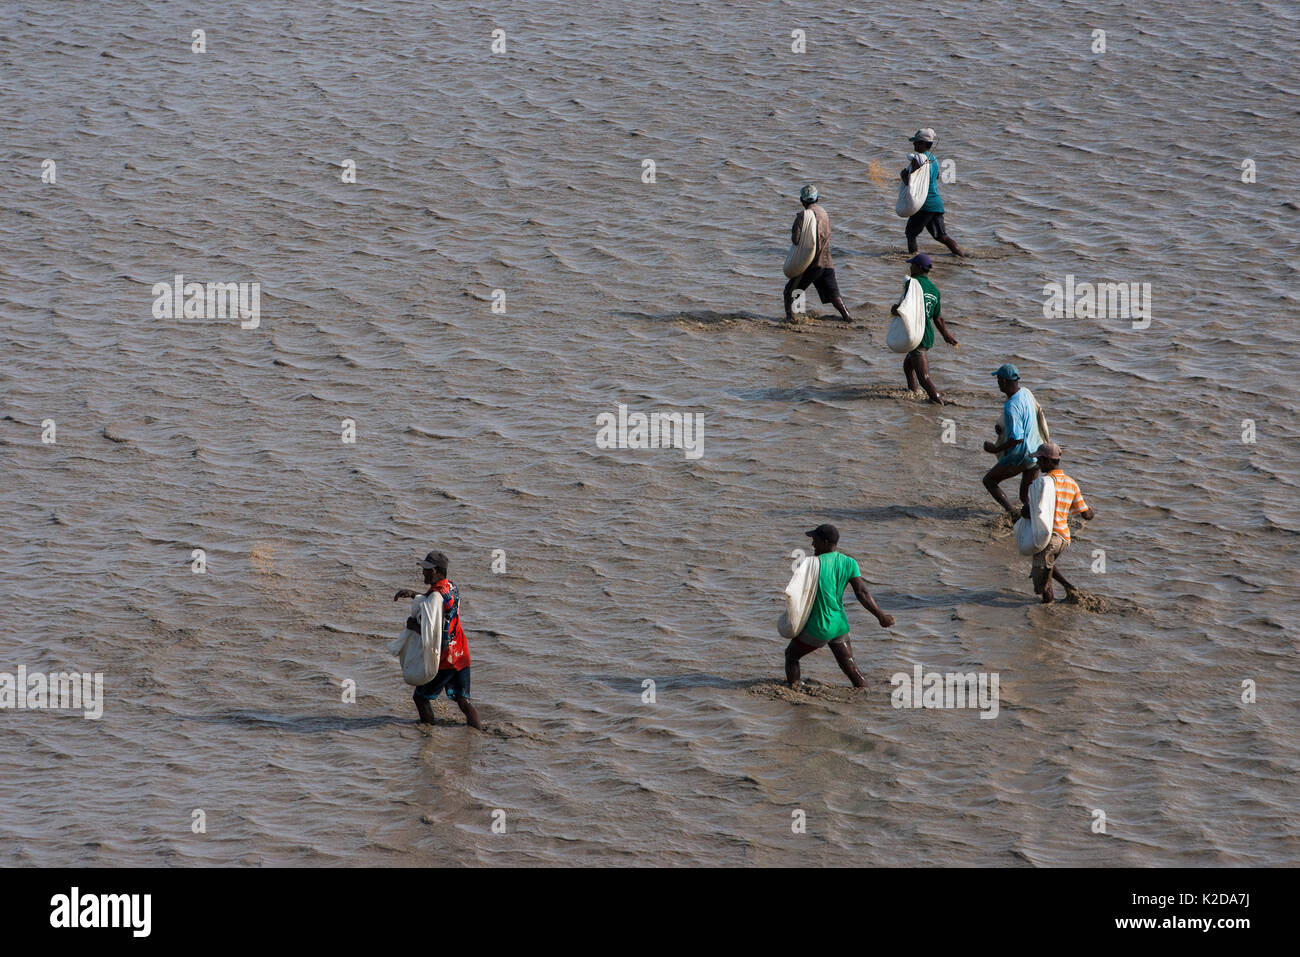 People working in rice fields in coastal area, Guyana, South America Stock Photo